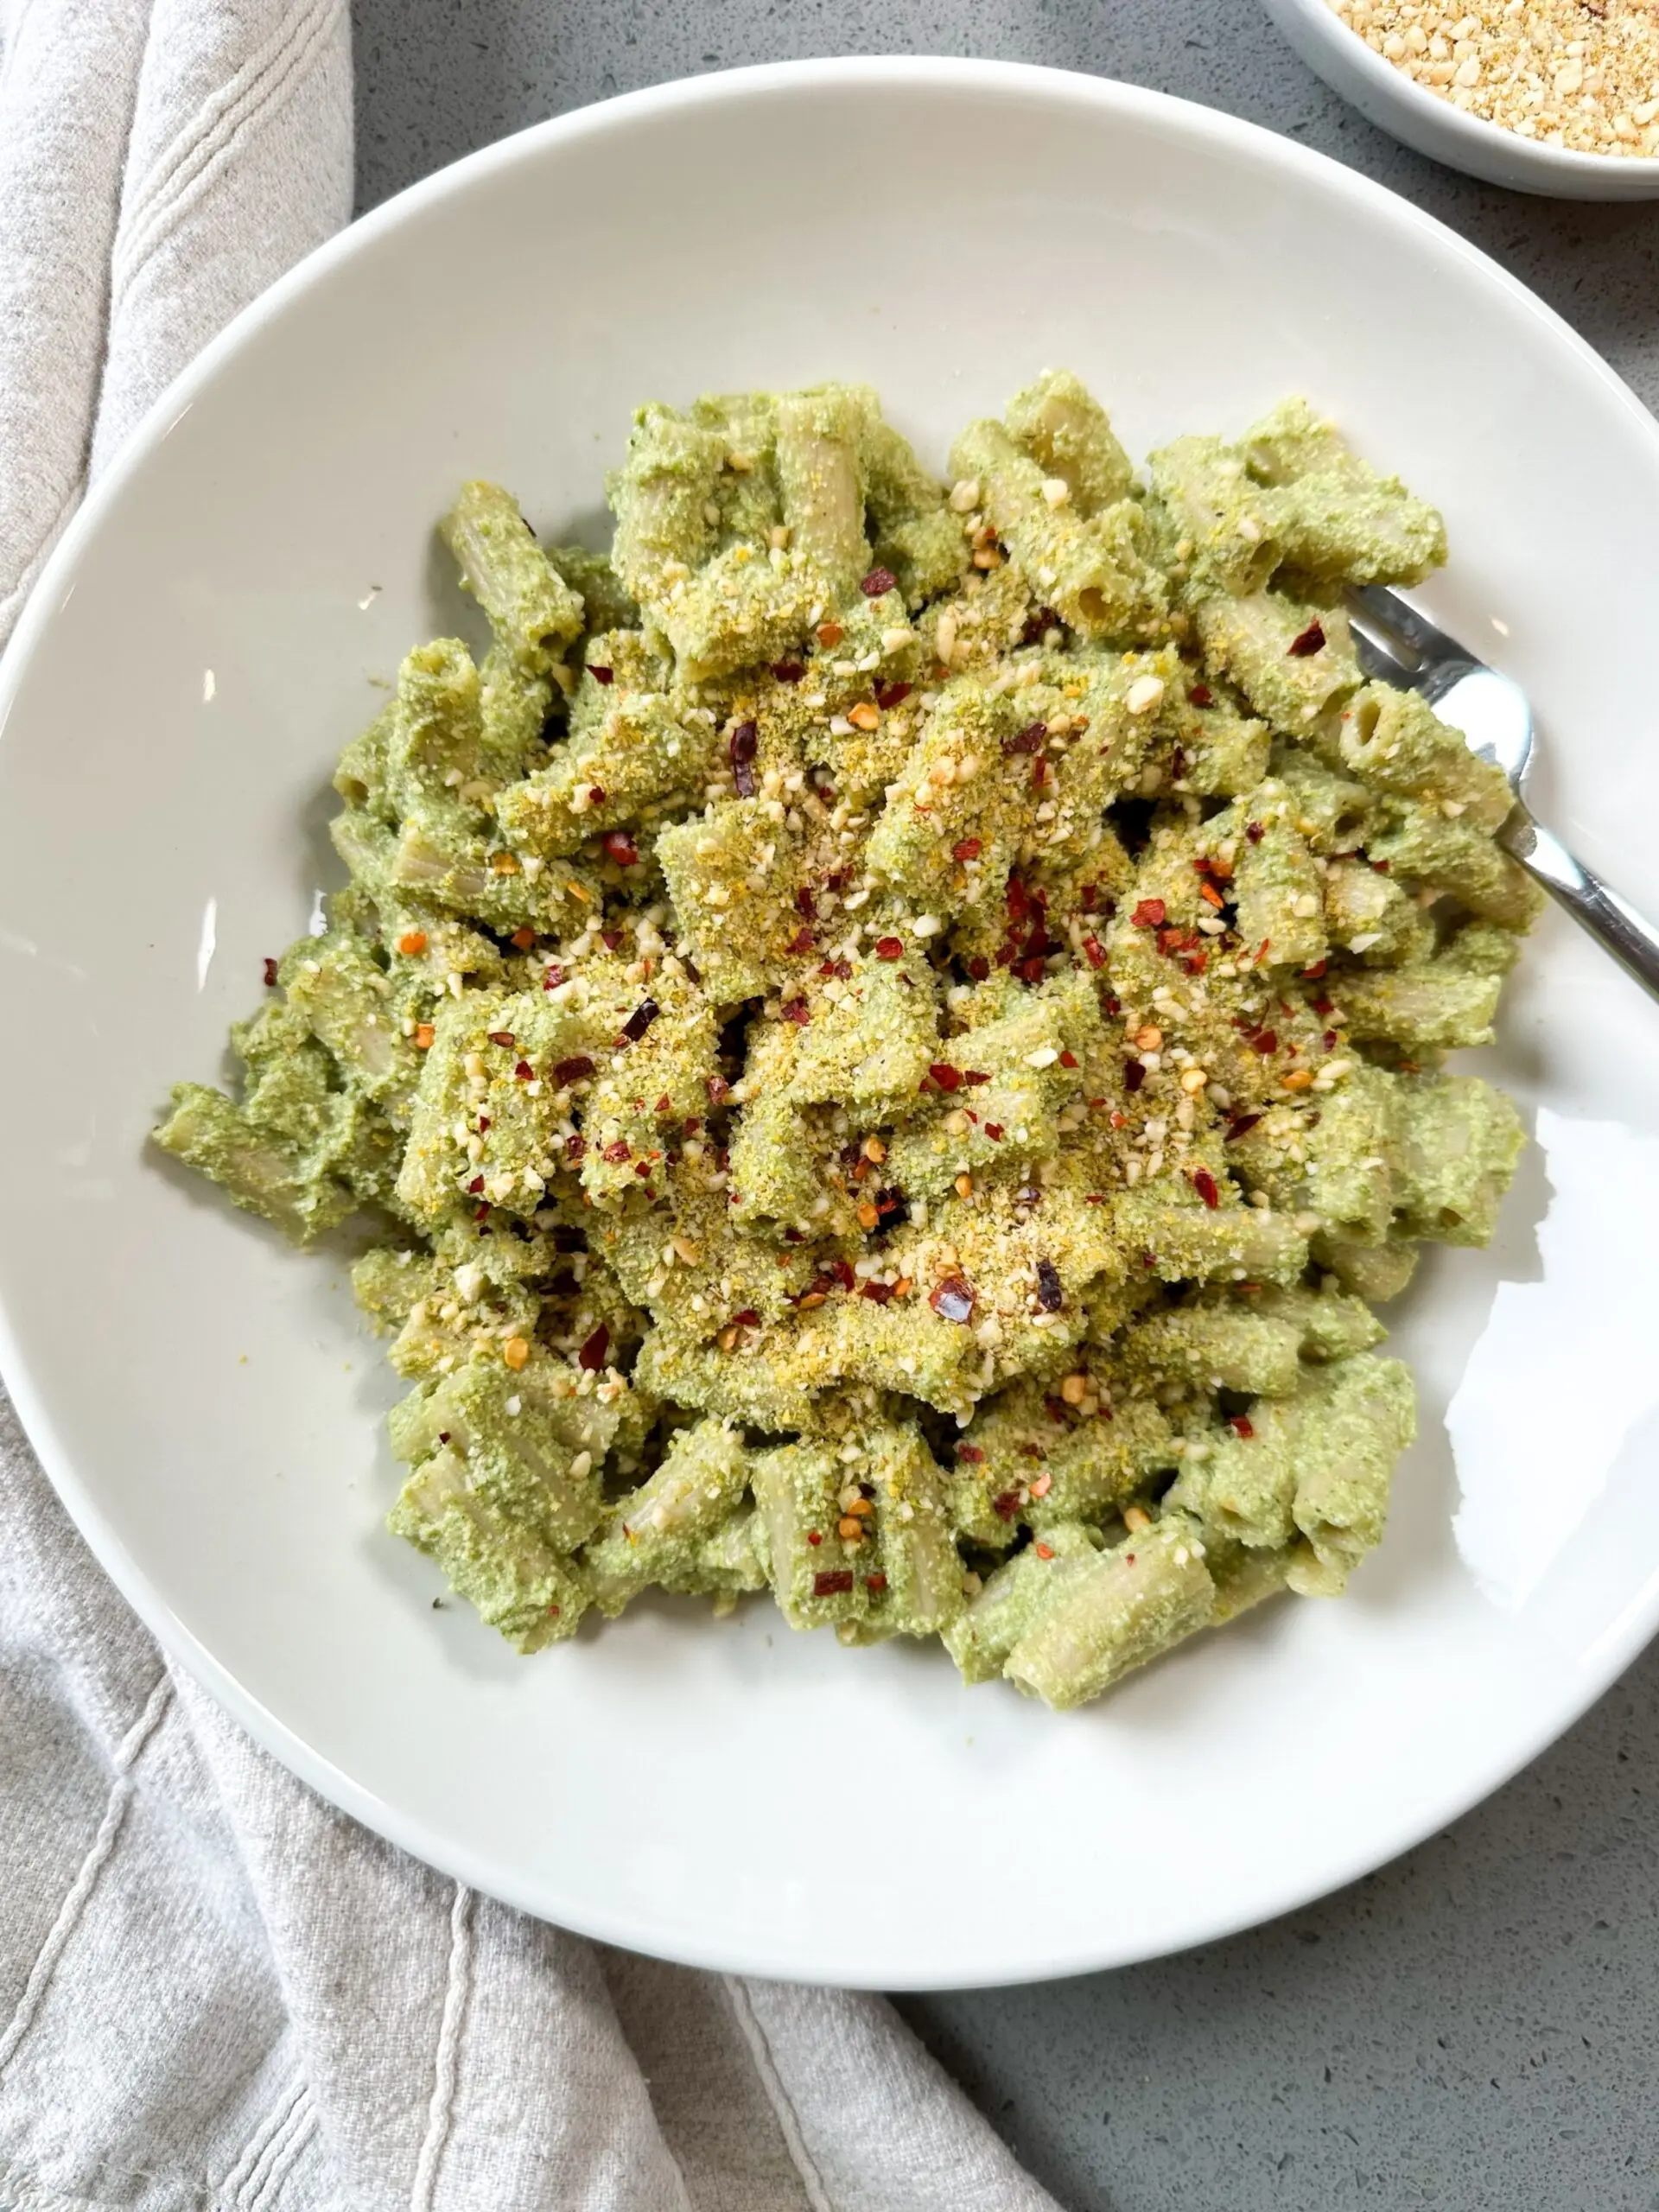 PHOTO: A bowl of green veggie pasta from Jenn Lueke.